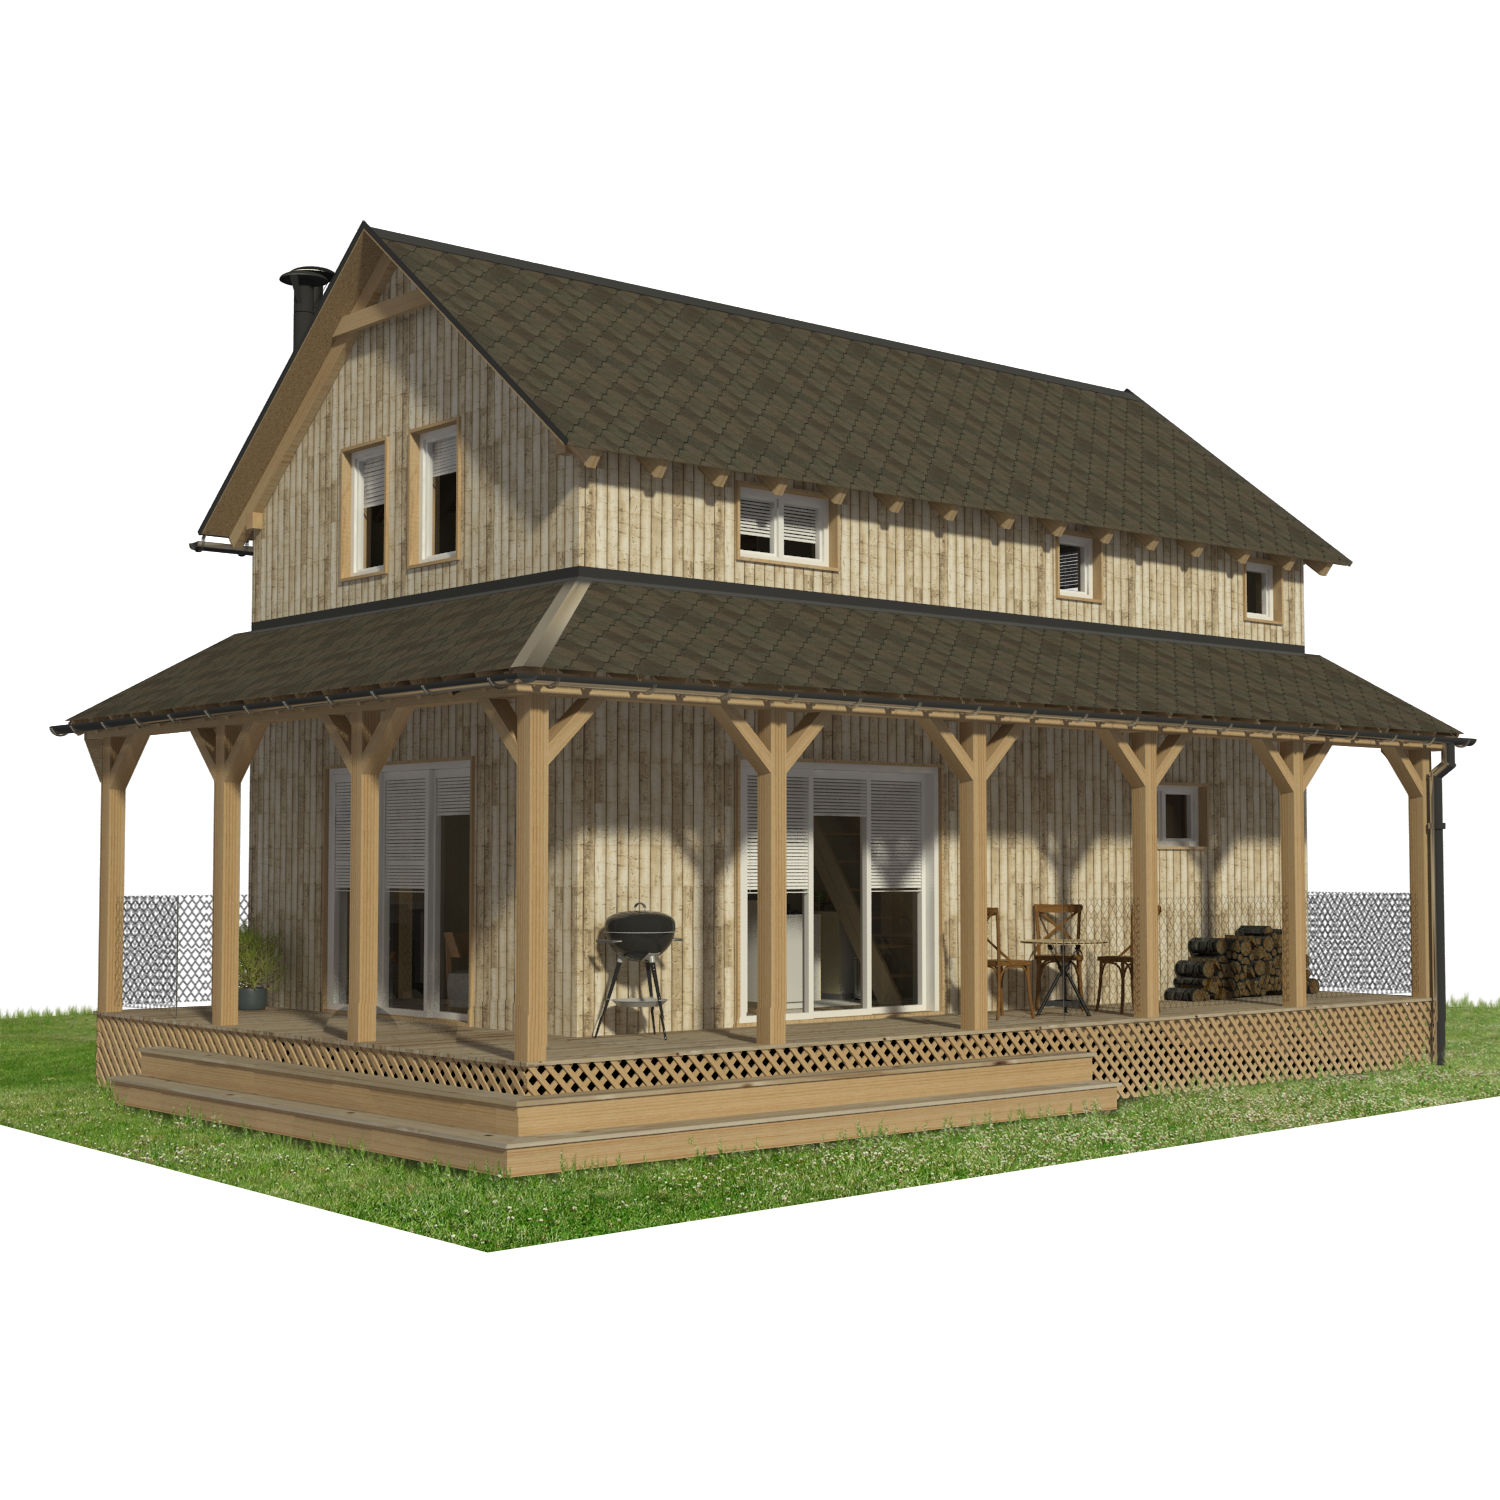 ultra modern ranch house plans